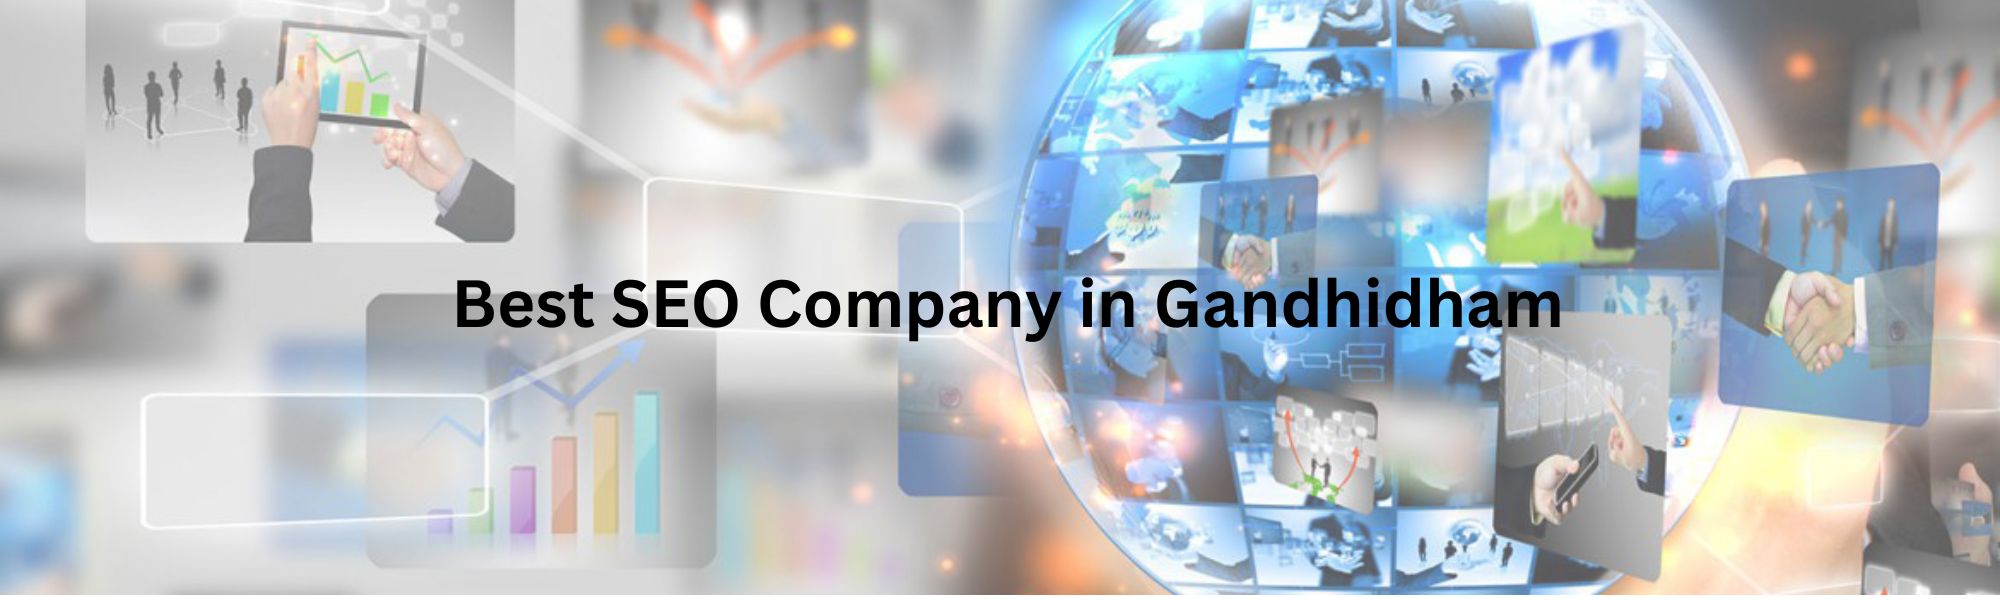 Best SEO Company In Gandhidham